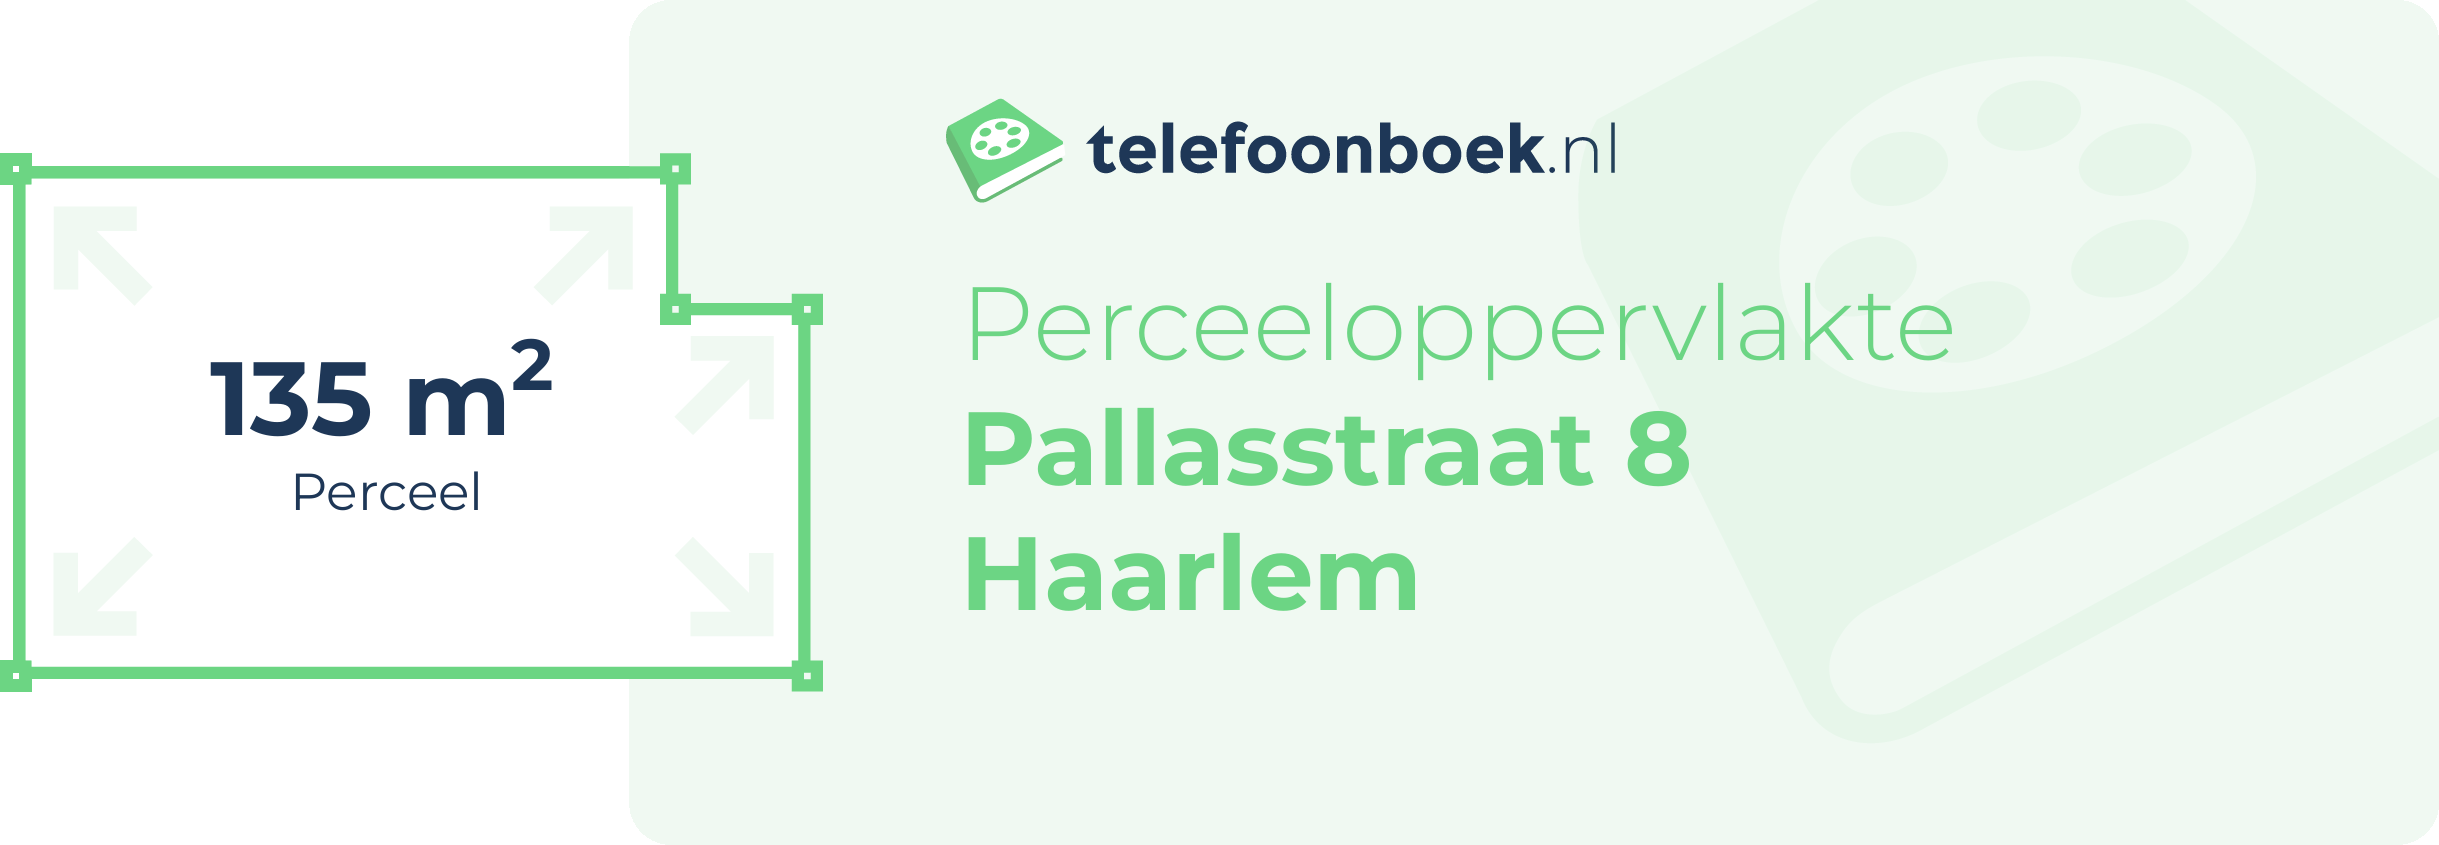 Perceeloppervlakte Pallasstraat 8 Haarlem